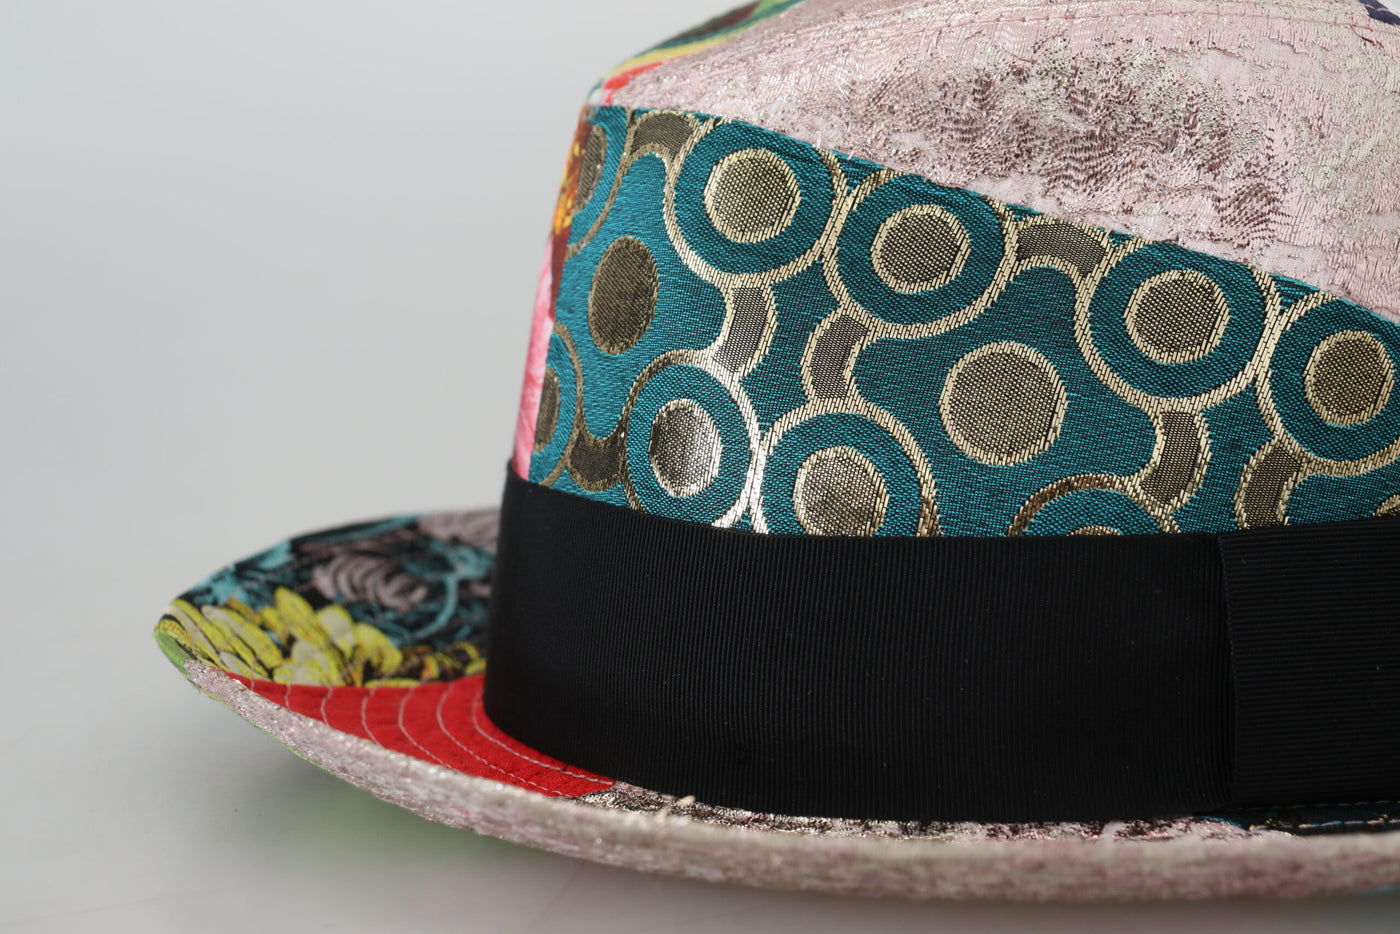 Dolce & Gabbana Multicolor Patchwork Women Fedora Wide Brim Hat